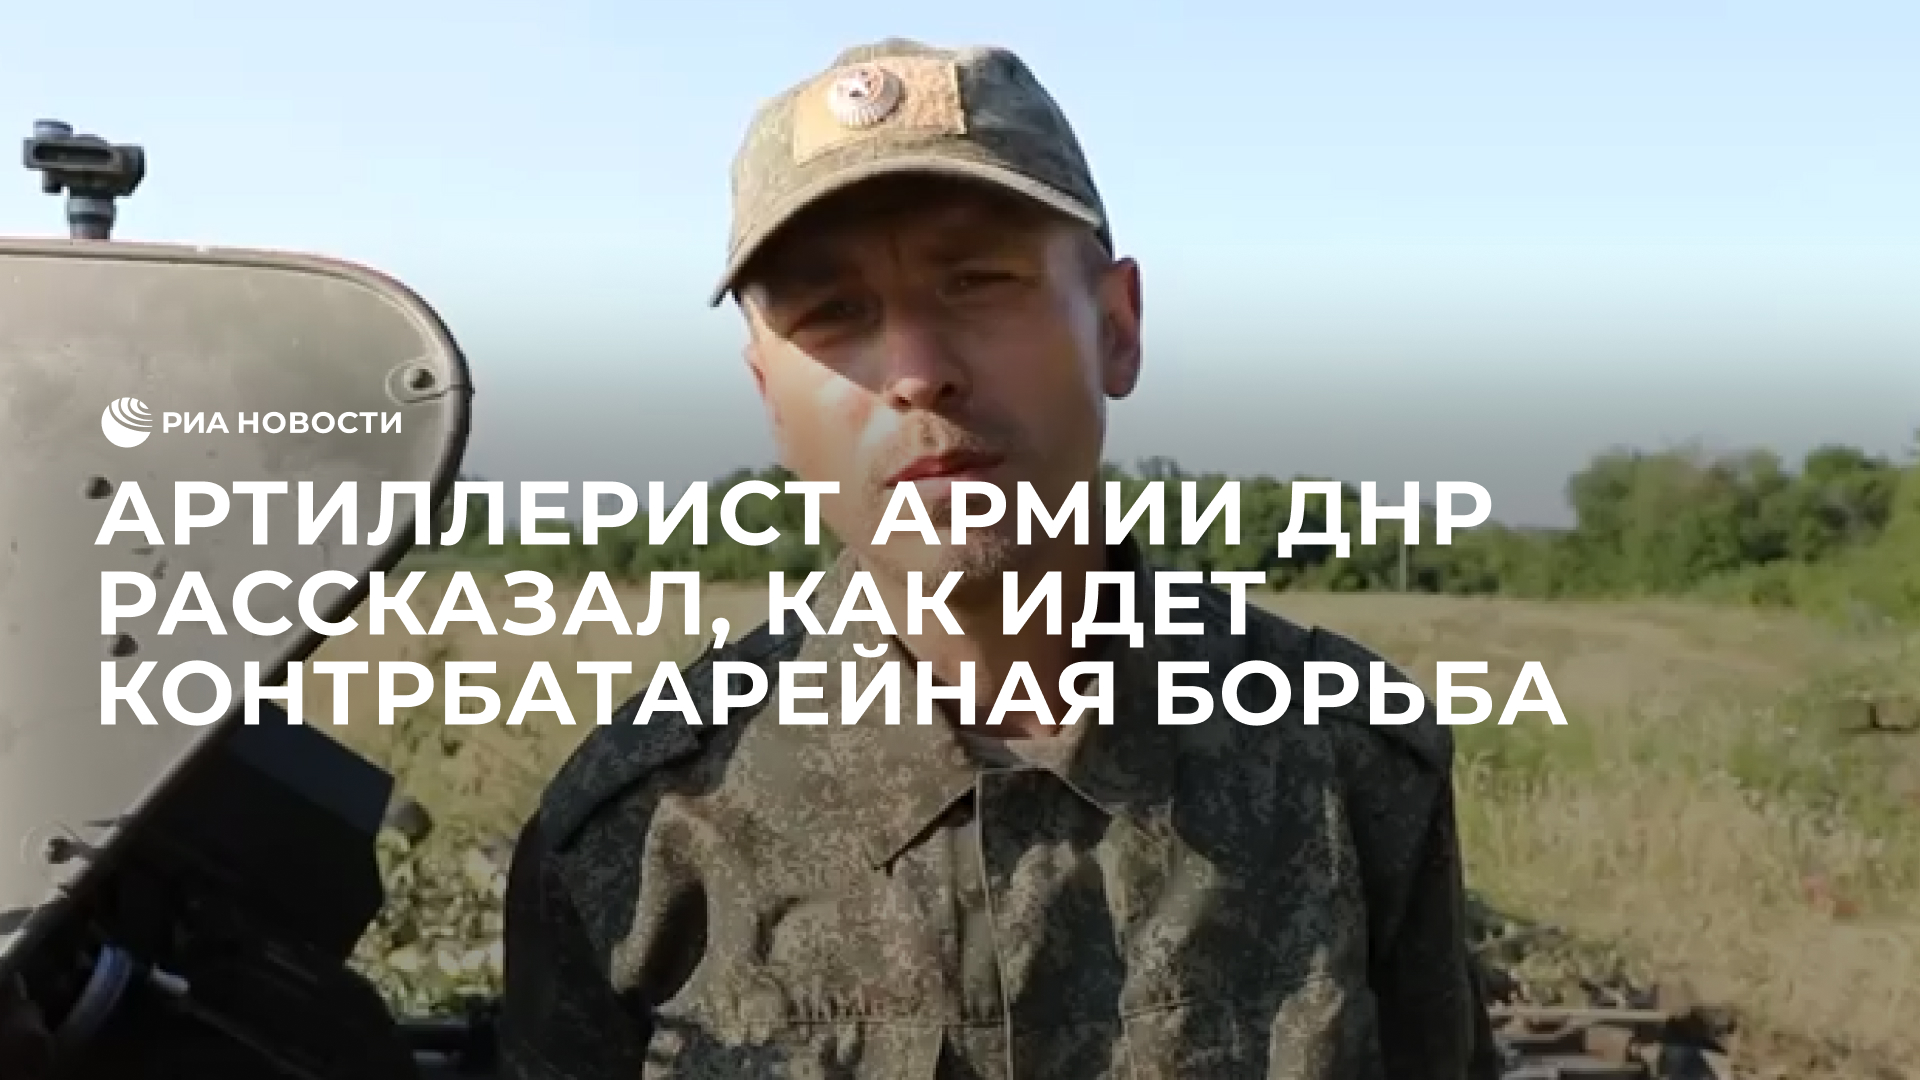 Артиллерист армии ДНР рассказал, как идет контрбатарейная борьба